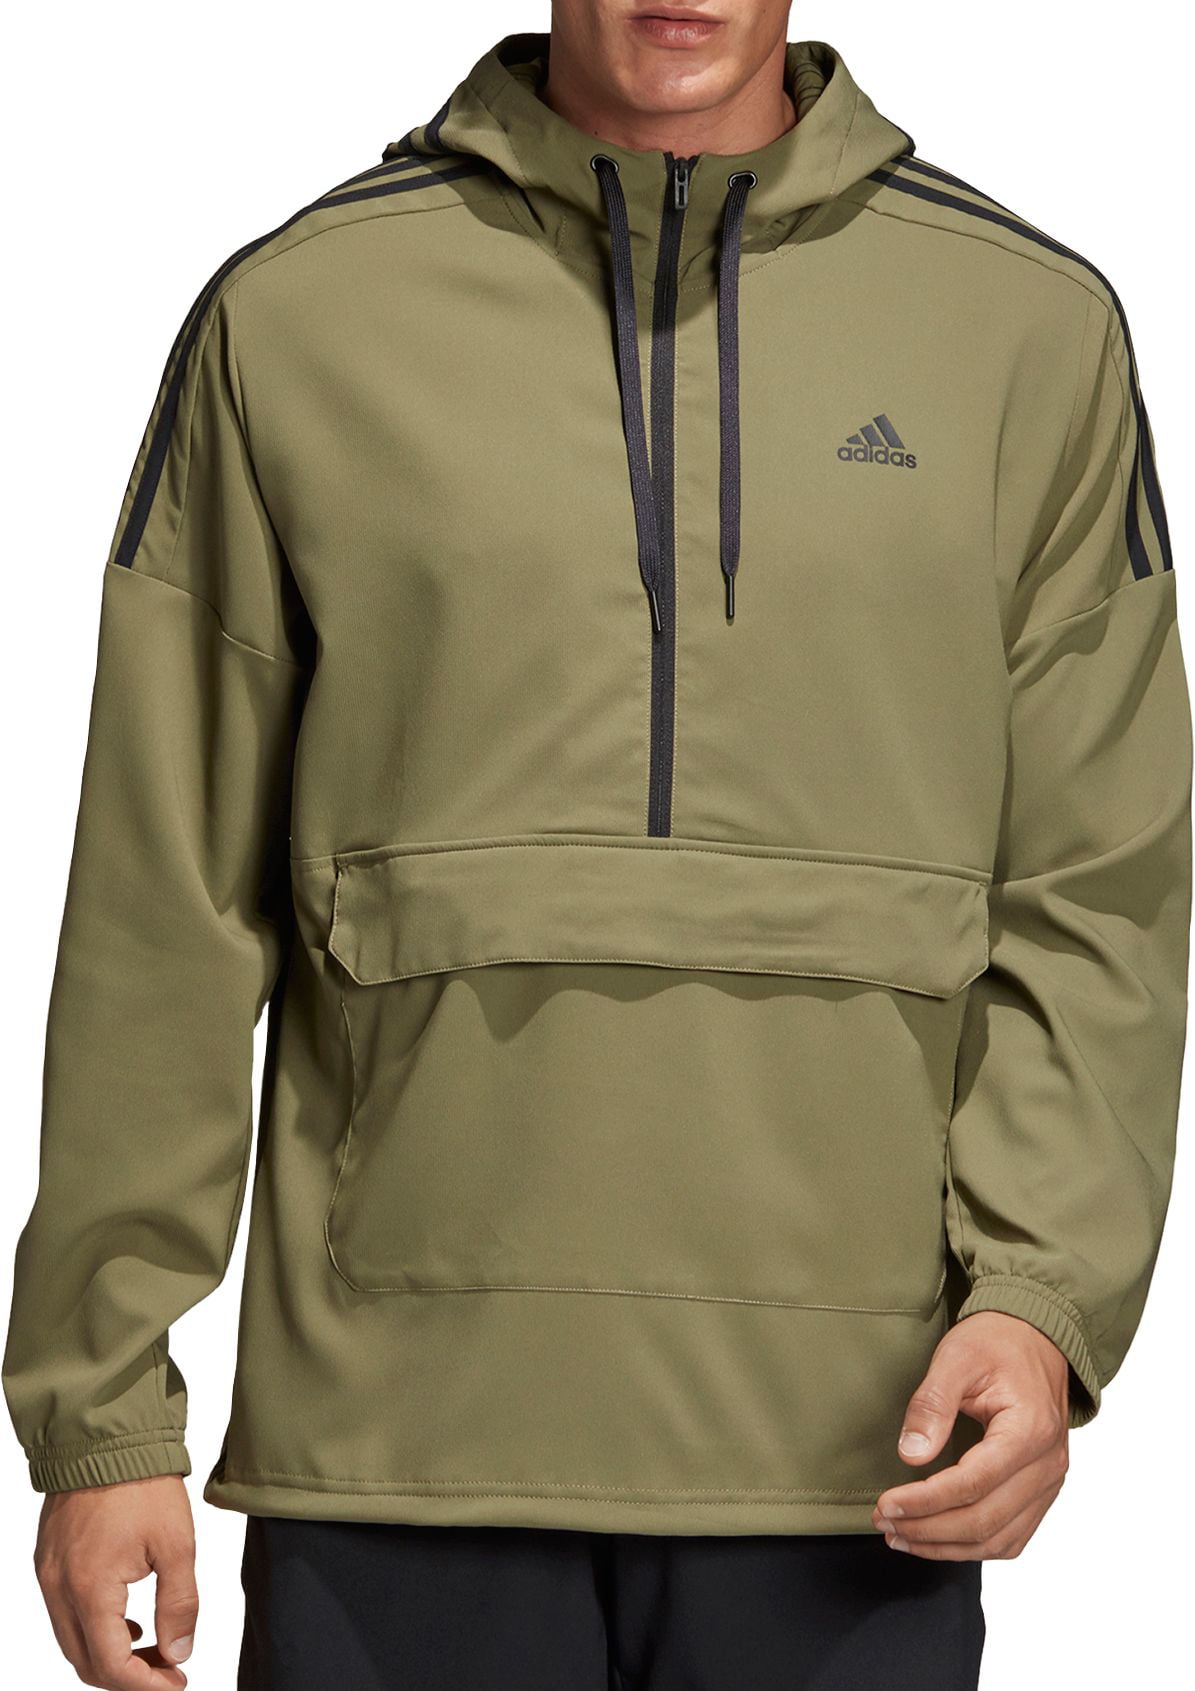 adidas men's anorak golf jacket